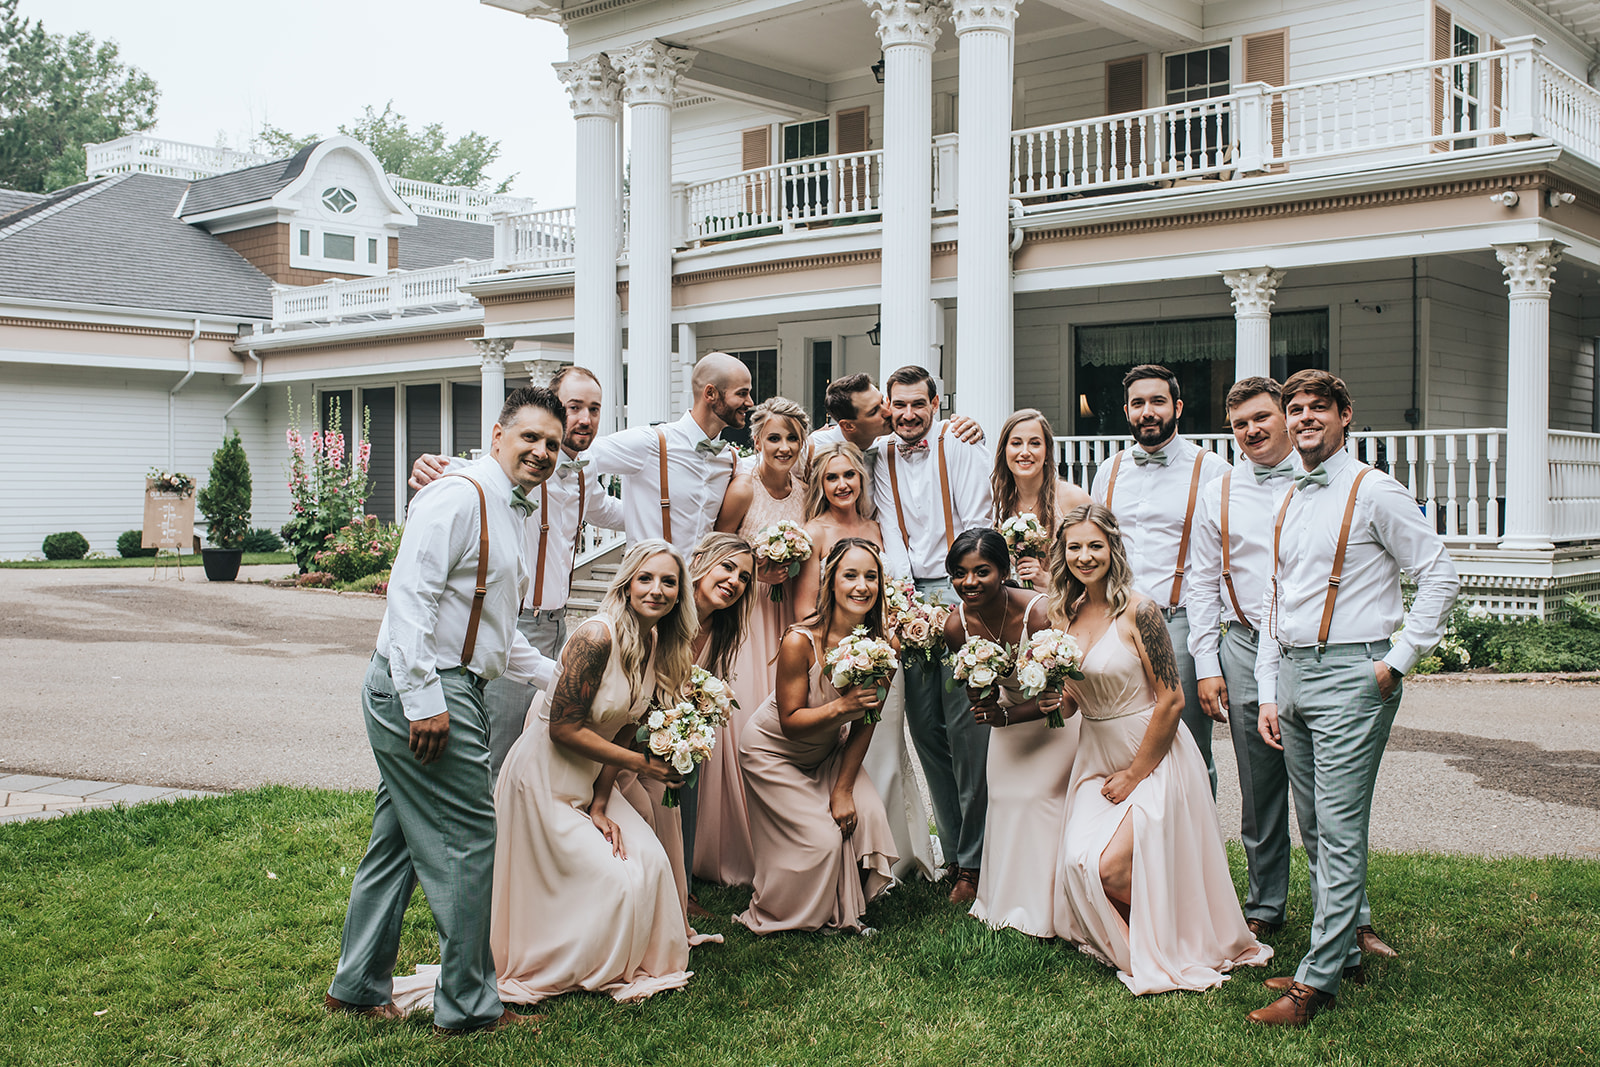 The Norland Historic Estate Summer Wedding